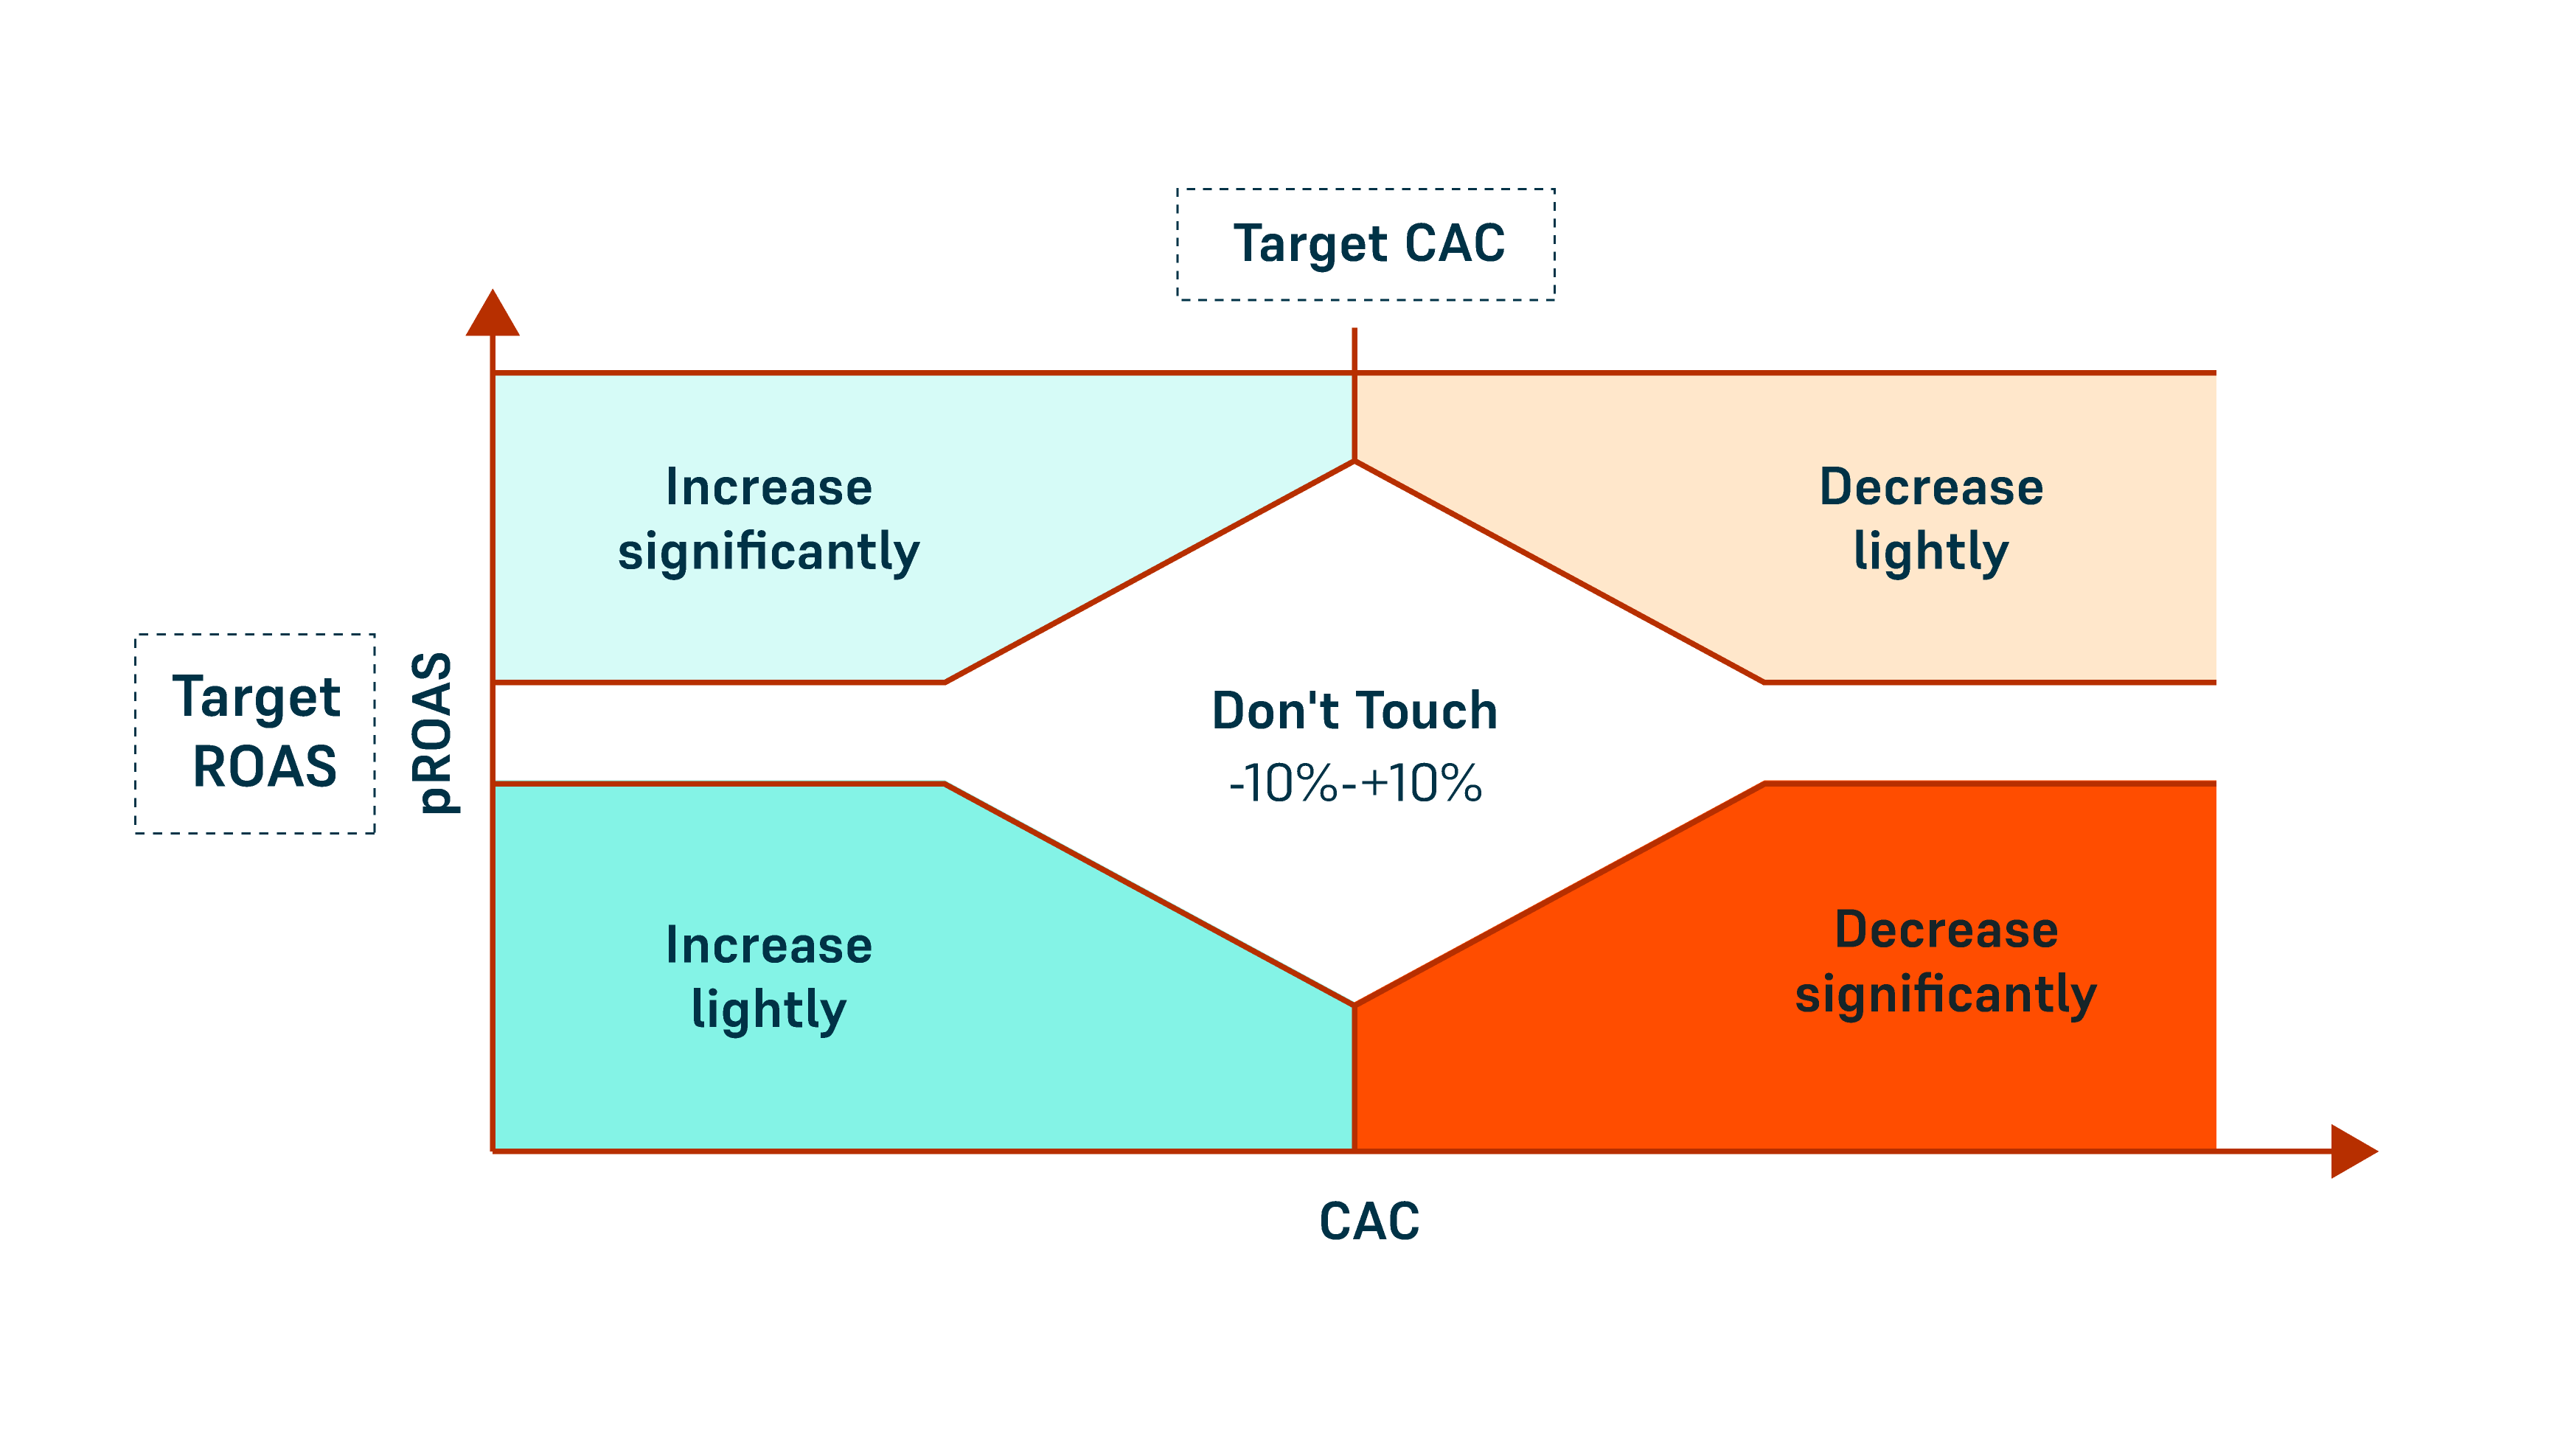 CAC and Predictive LTV based optimization